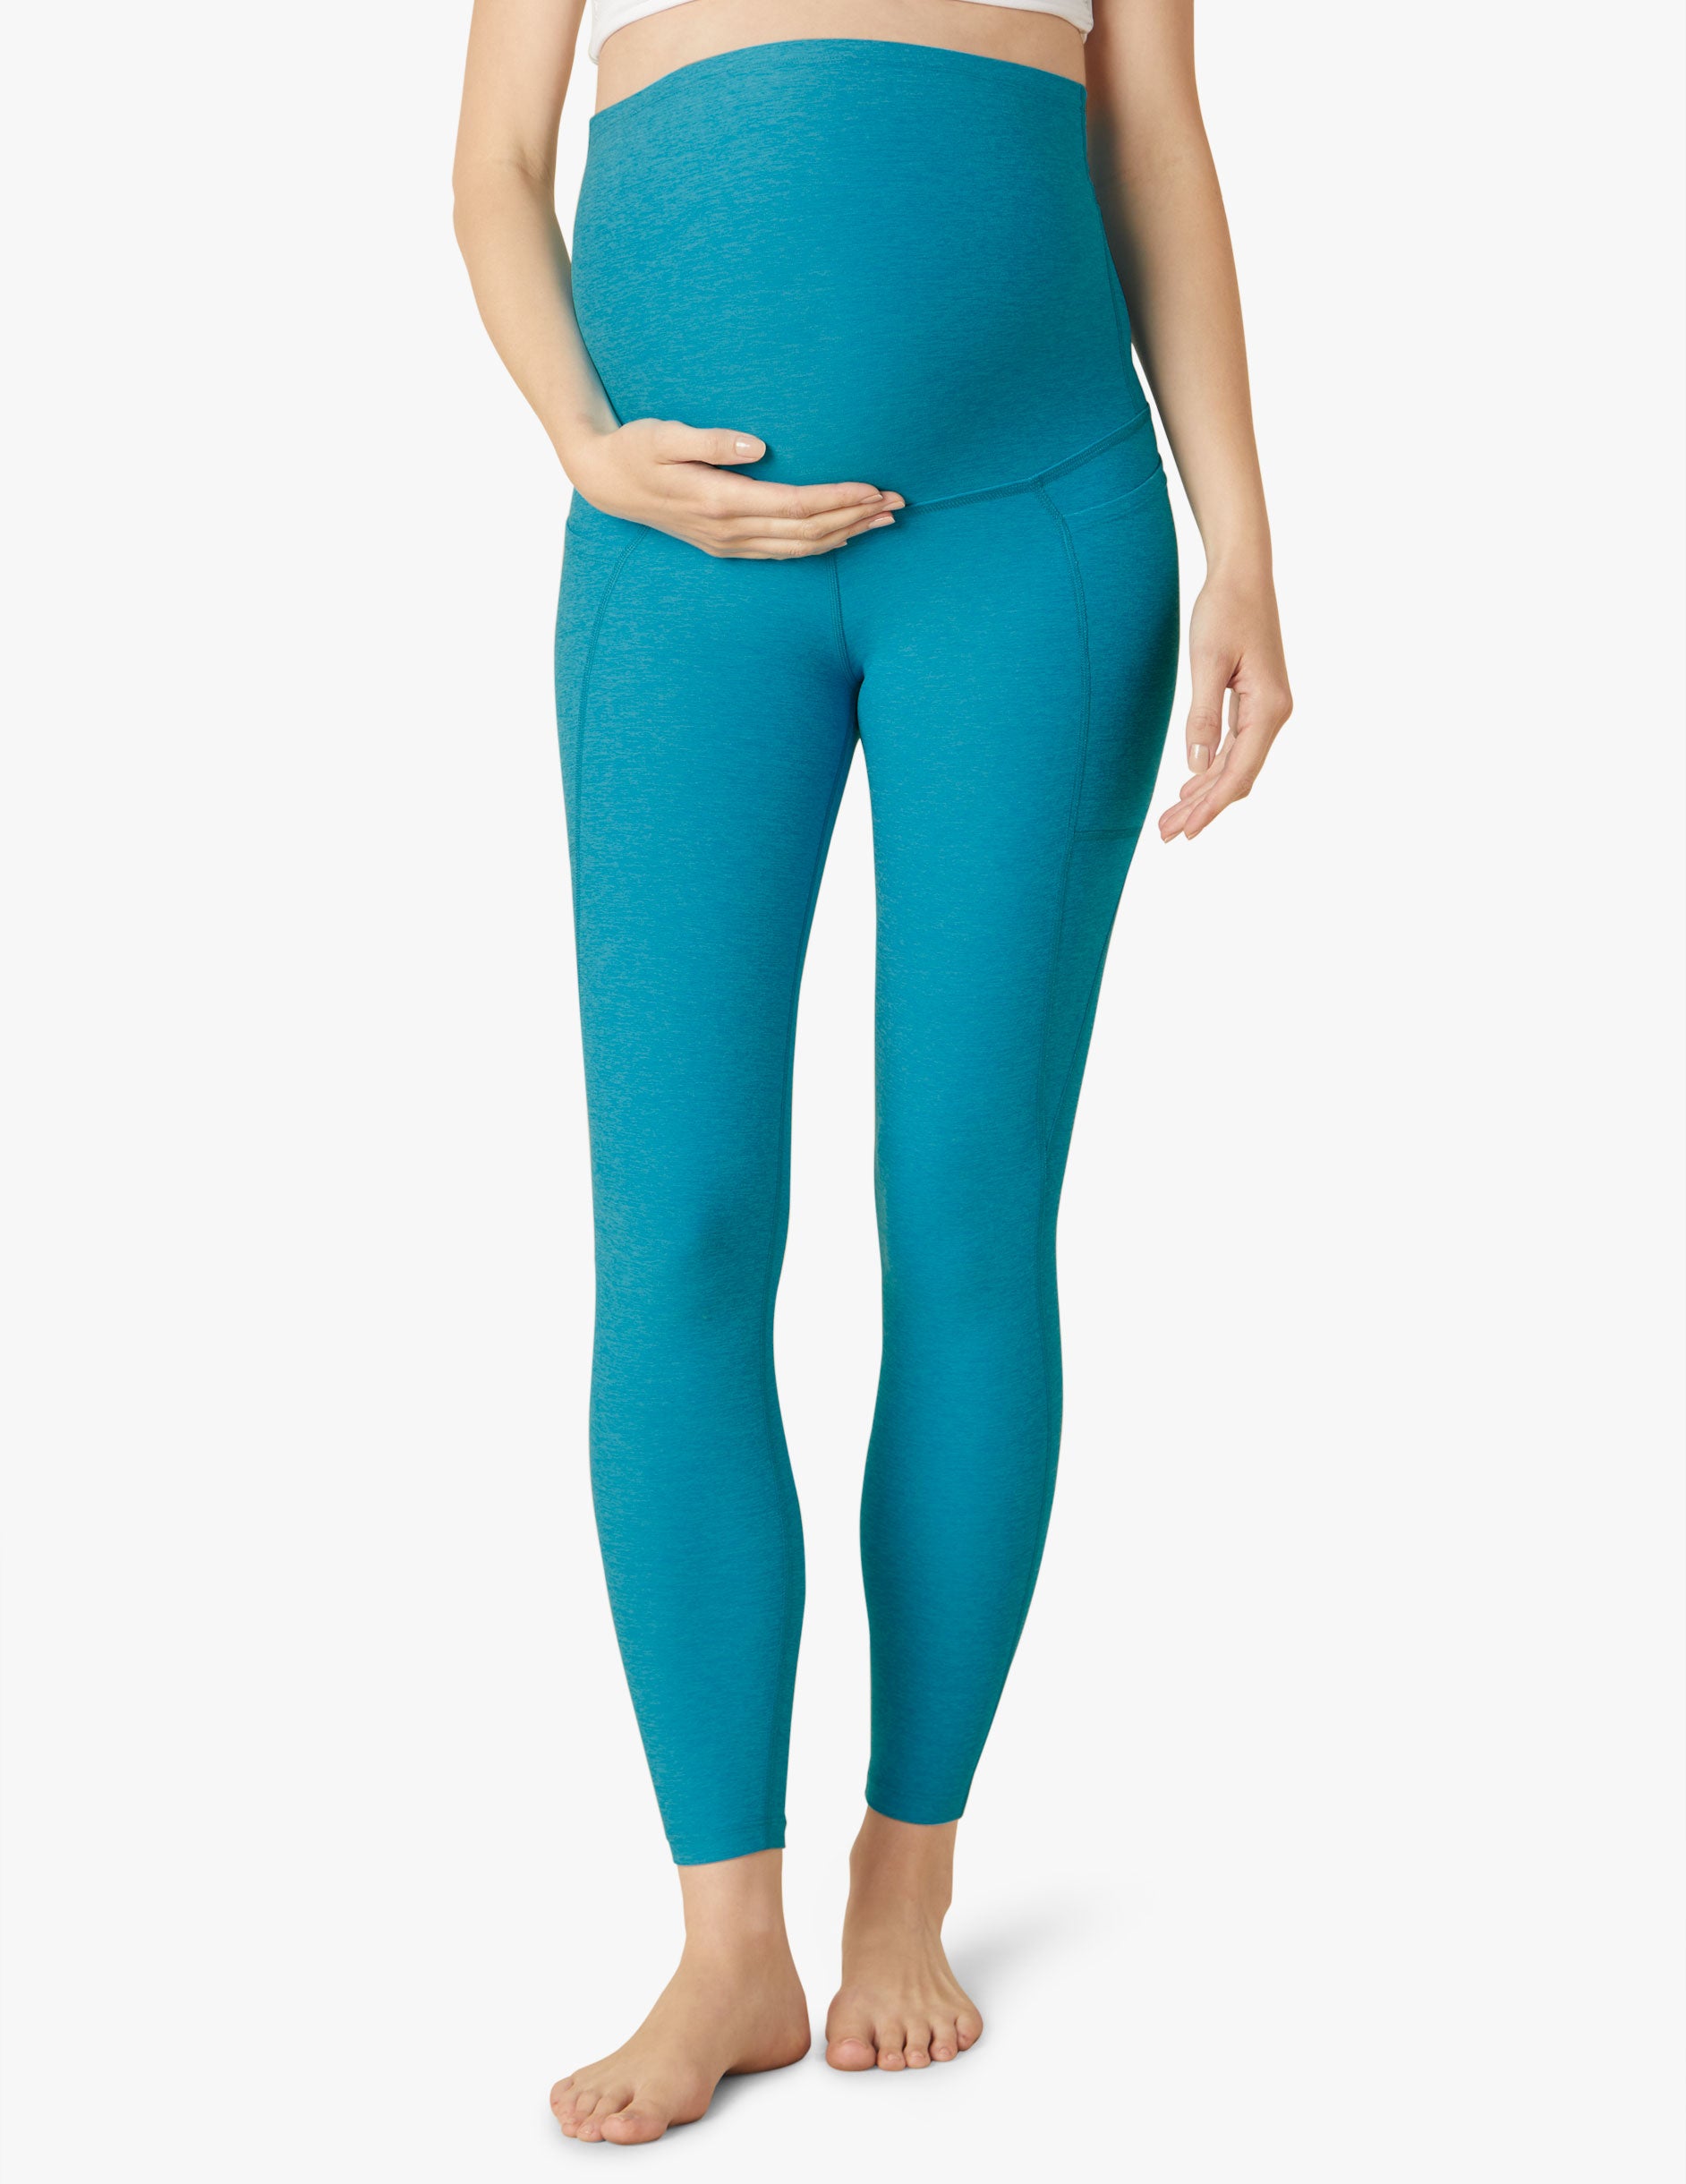 blue maternity midi legging with pocket at sides